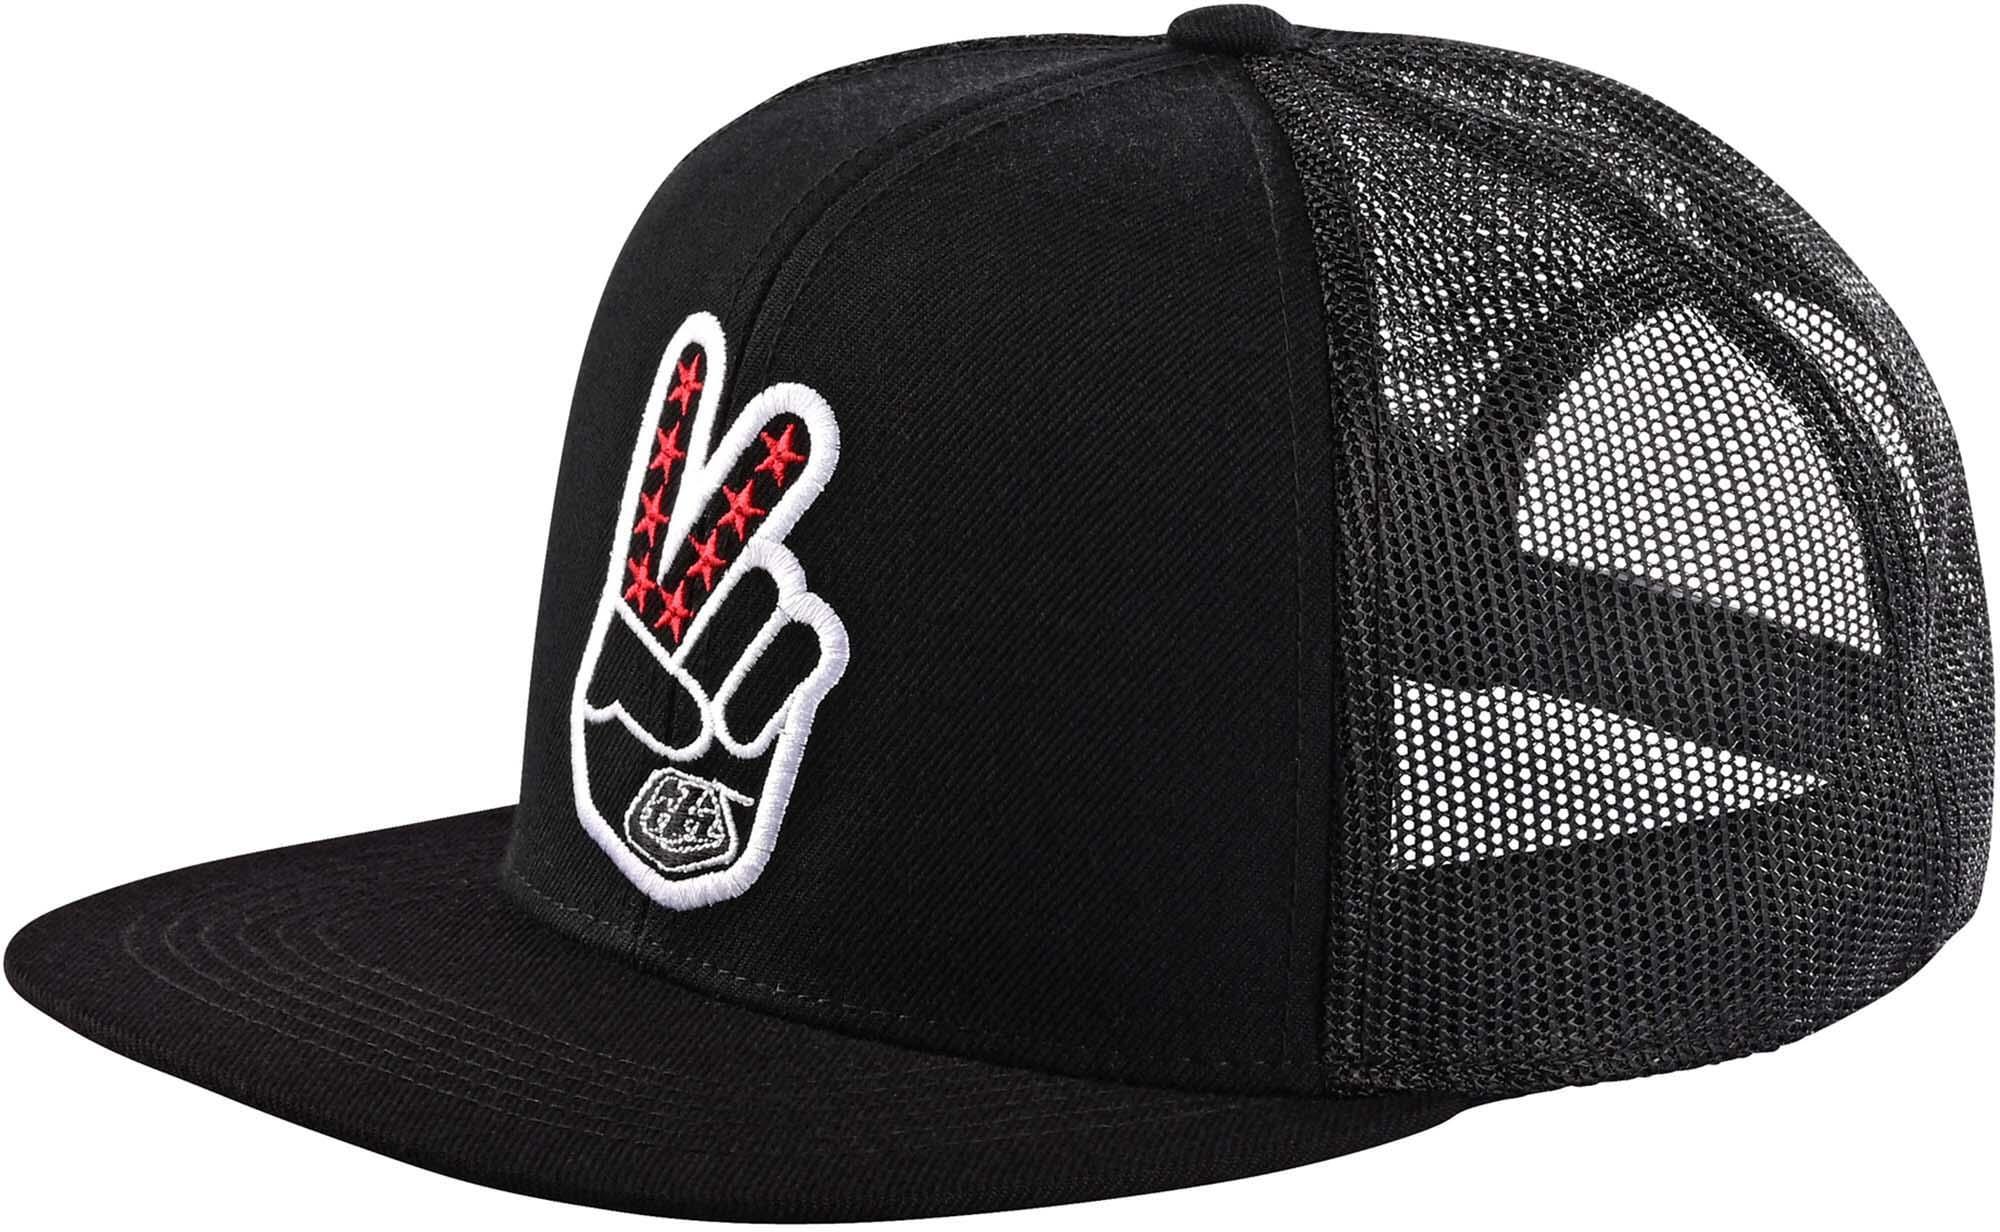 Troy Lee Designs Trucker Snapback Hat - Peace Out Black